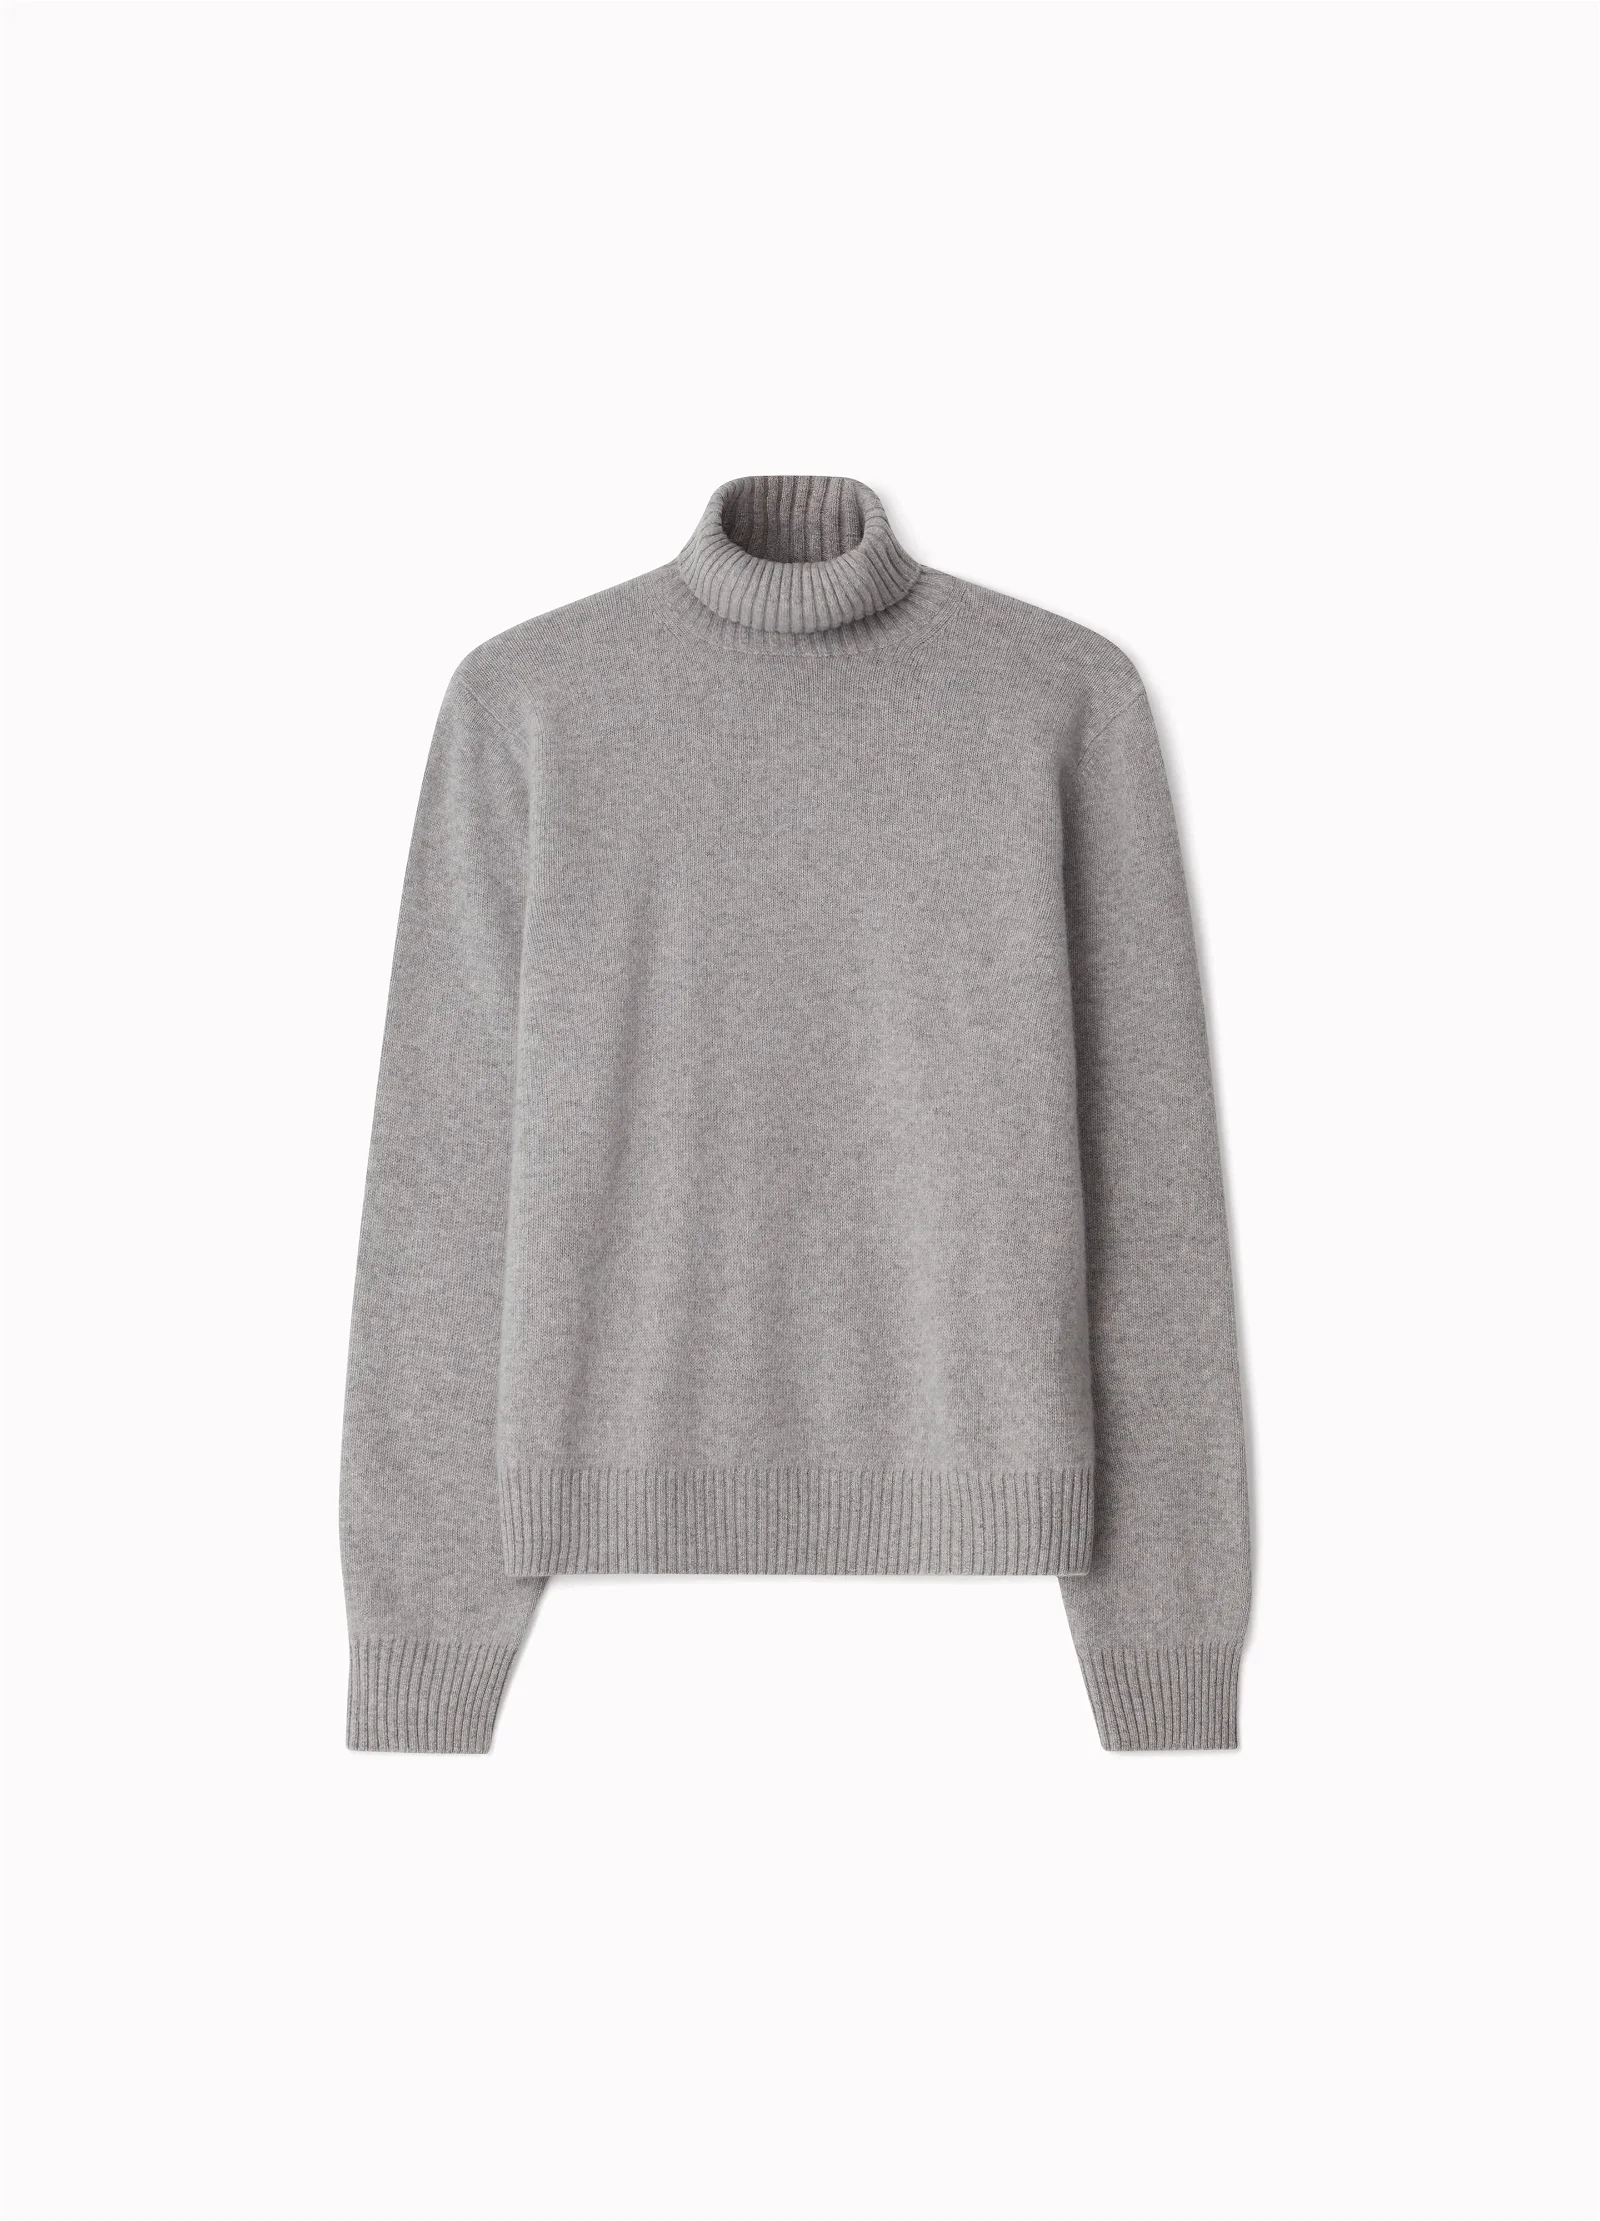 Image of Benedict Rollneck Sweater - Light Grey